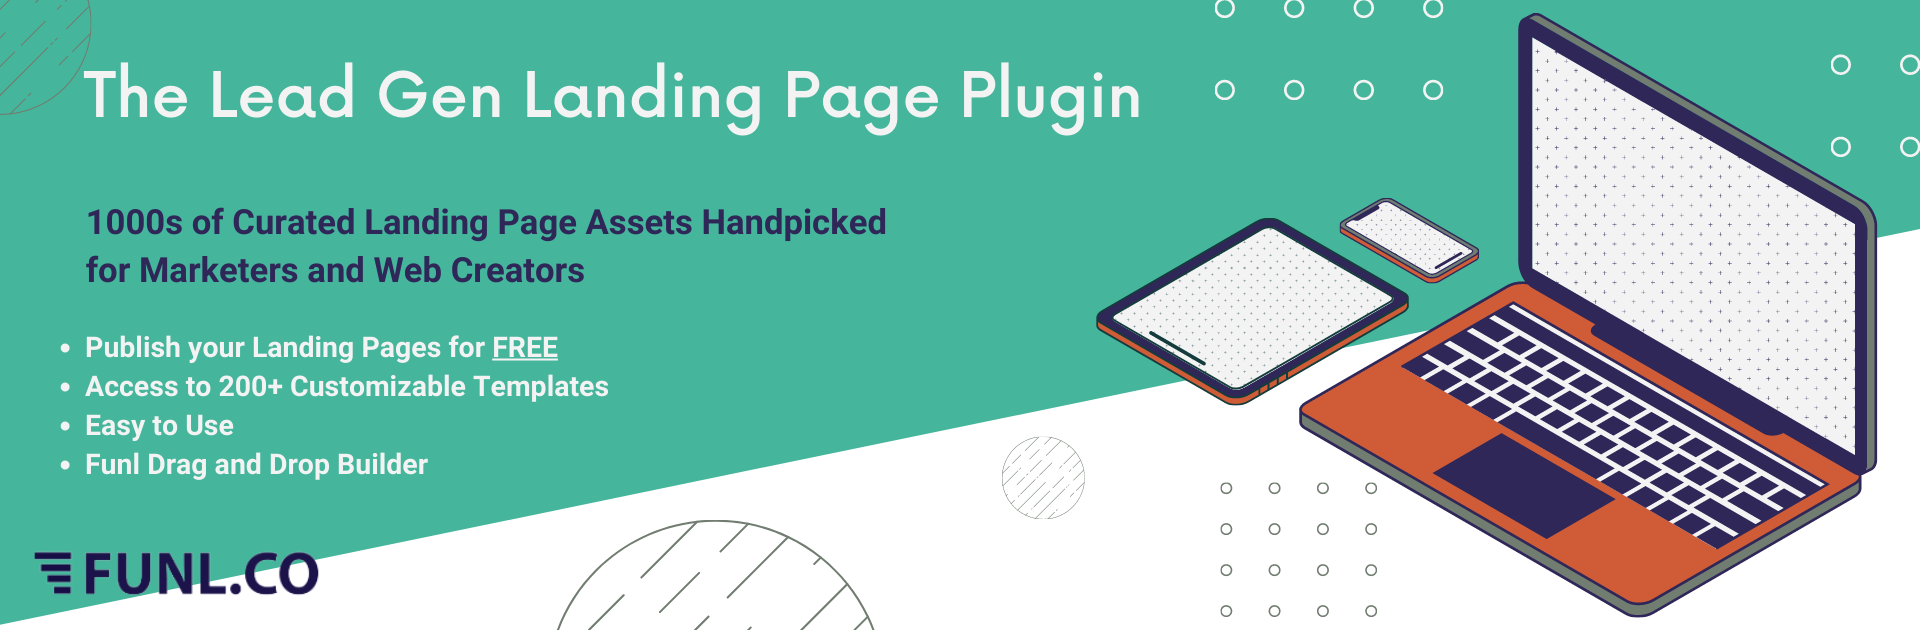 Lead Gen Landing Page Preview Wordpress Plugin - Rating, Reviews, Demo & Download